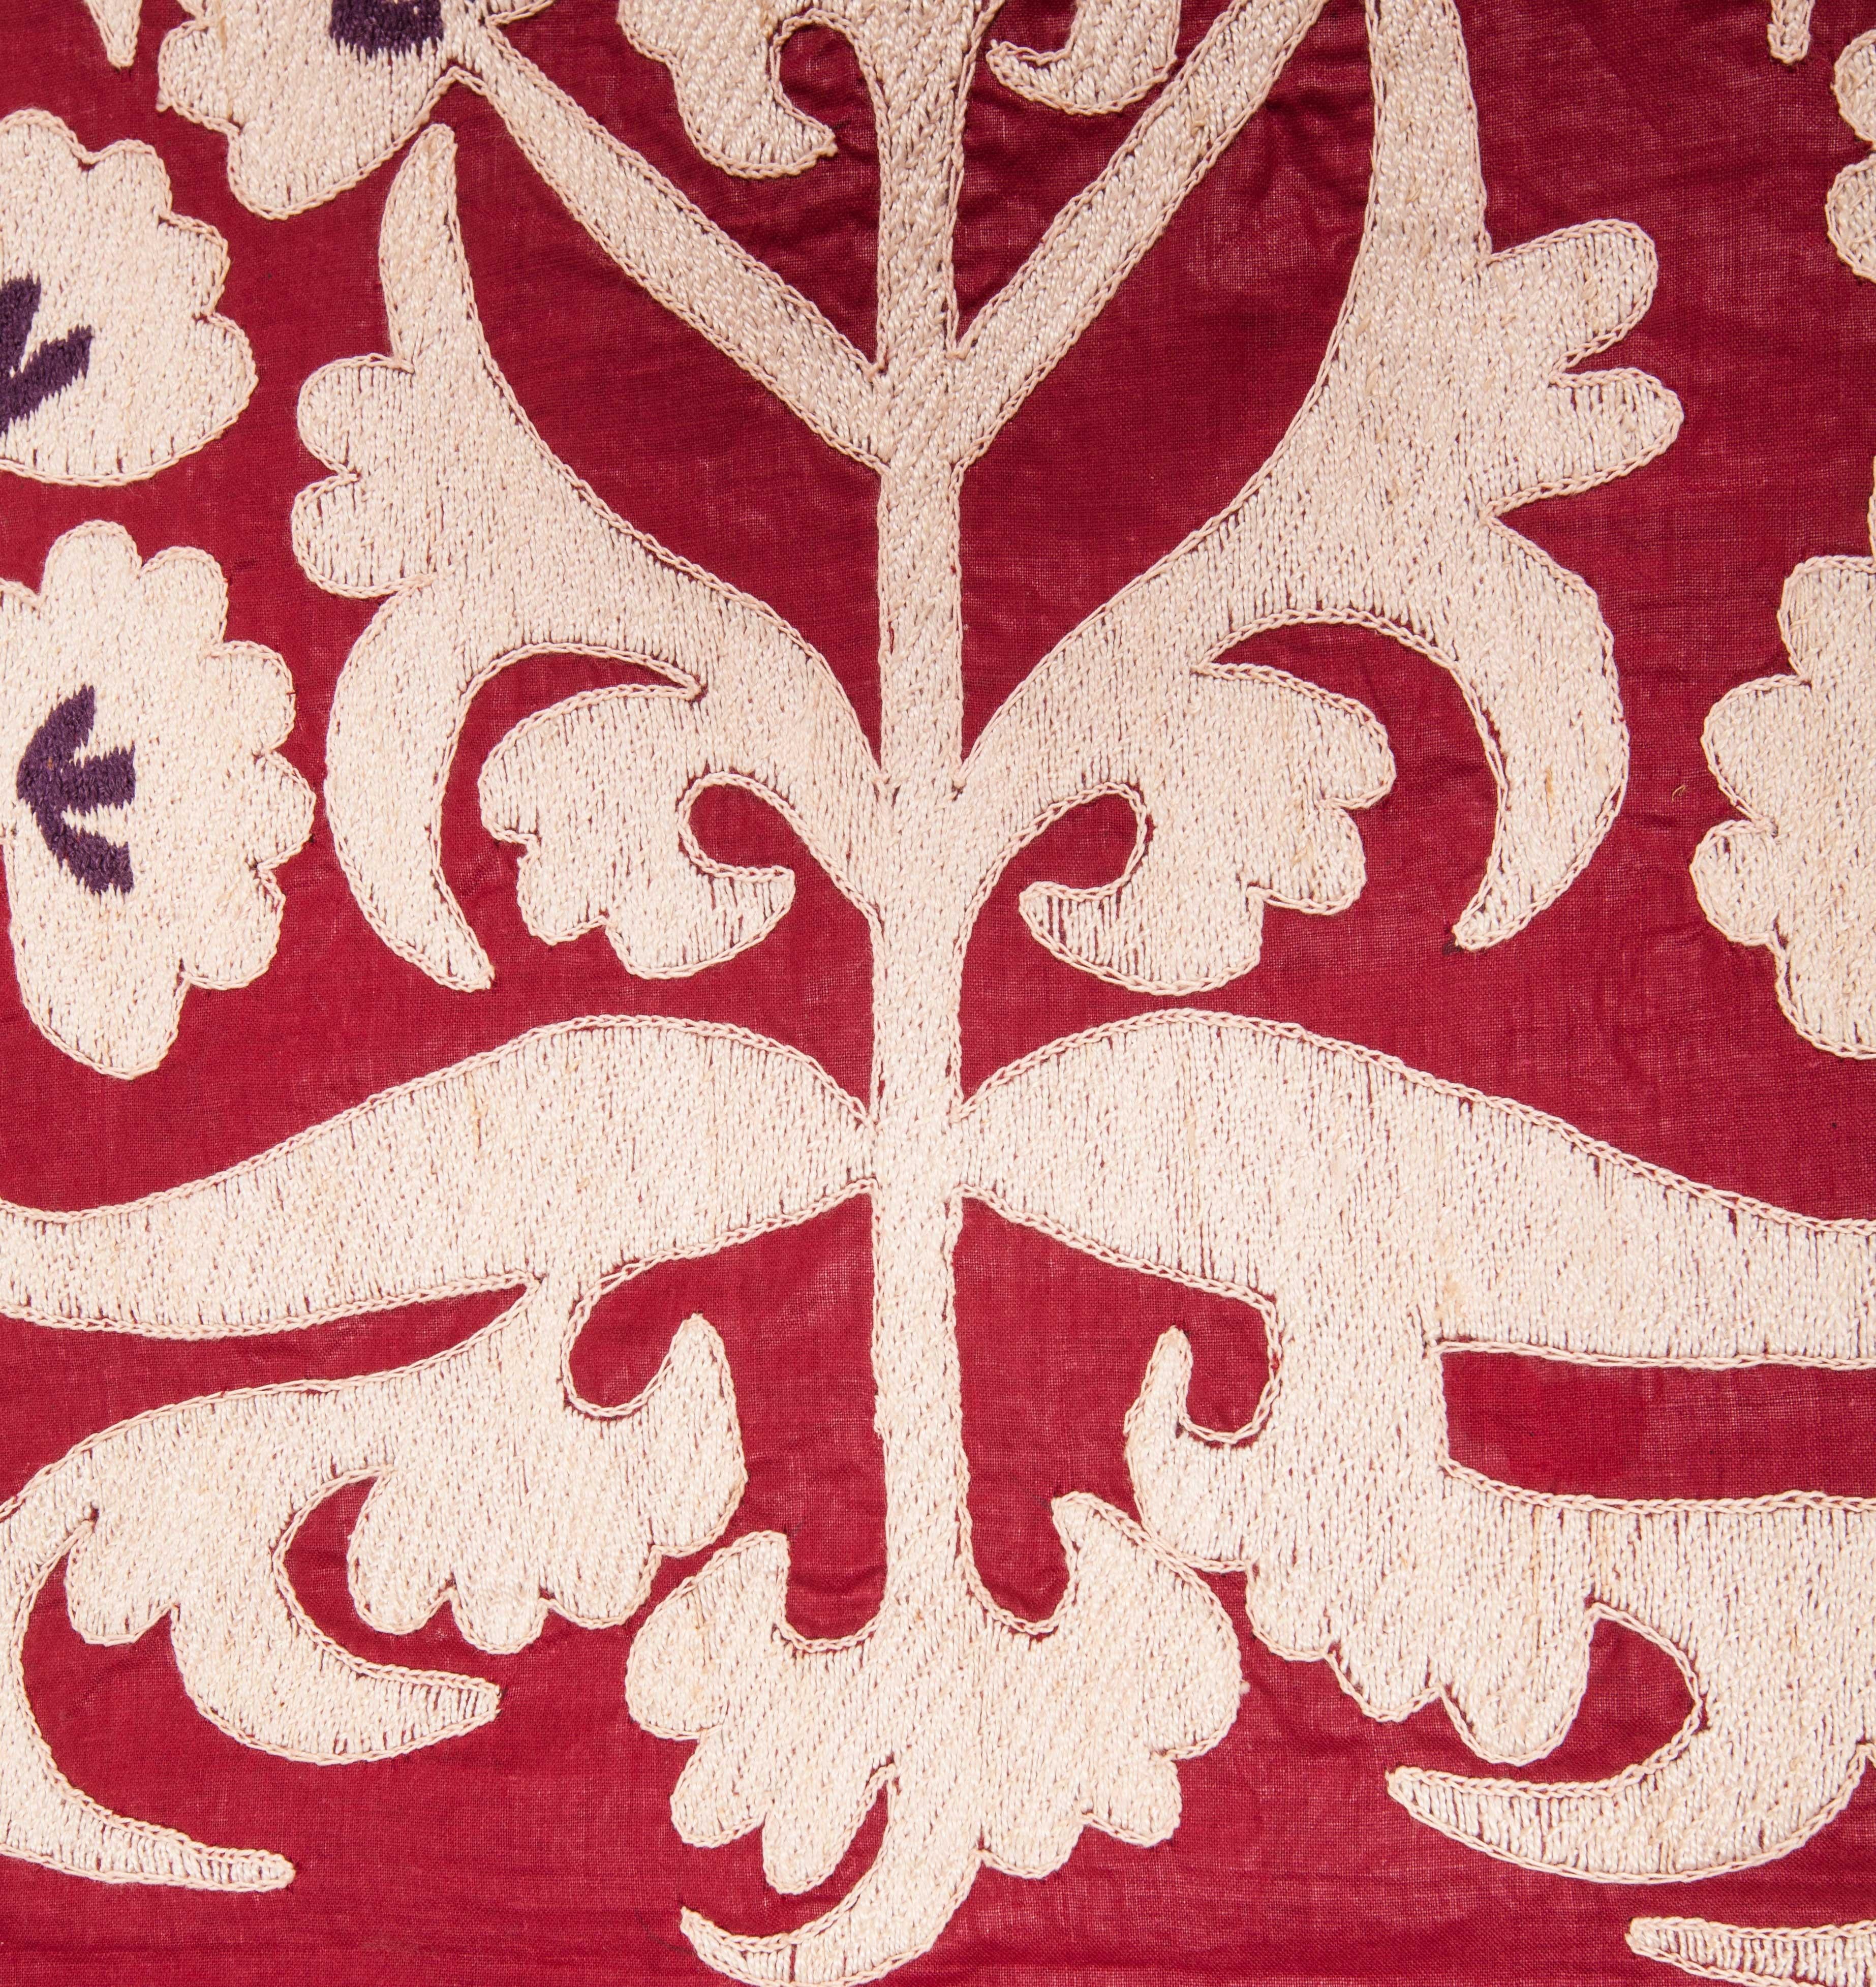 Cotton Samarkand Suzani, Red, White, Orange from Uzbekistan, Central Asia 1900s